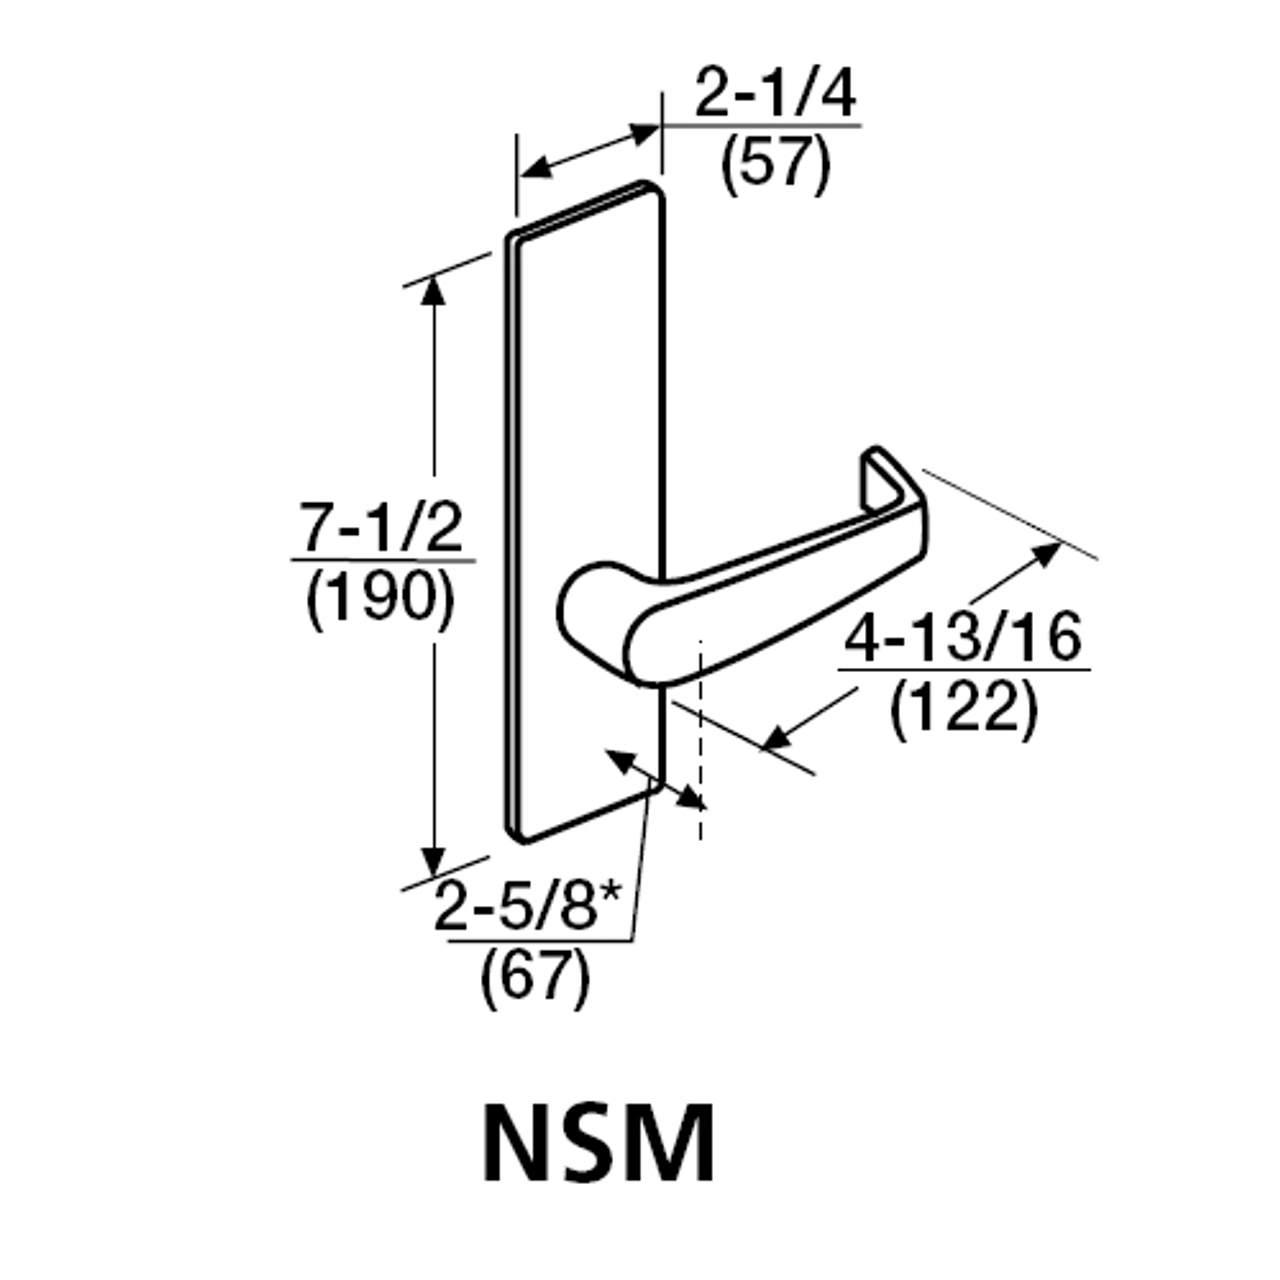 ML2032-NSM-612-LC Corbin Russwin ML2000 Series Mortise Institution Locksets with Newport Lever in Satin Bronze